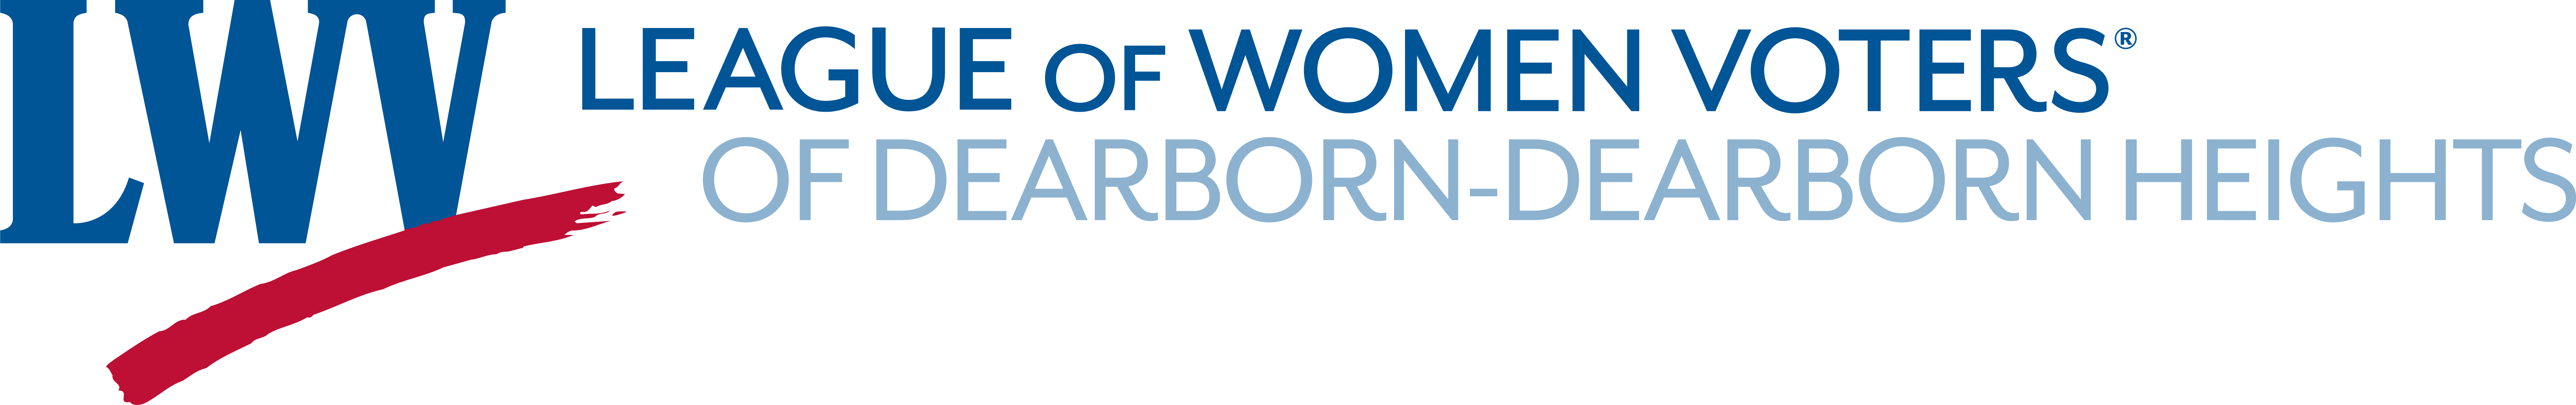 Dearborn-Dearborn Heights LWV logo